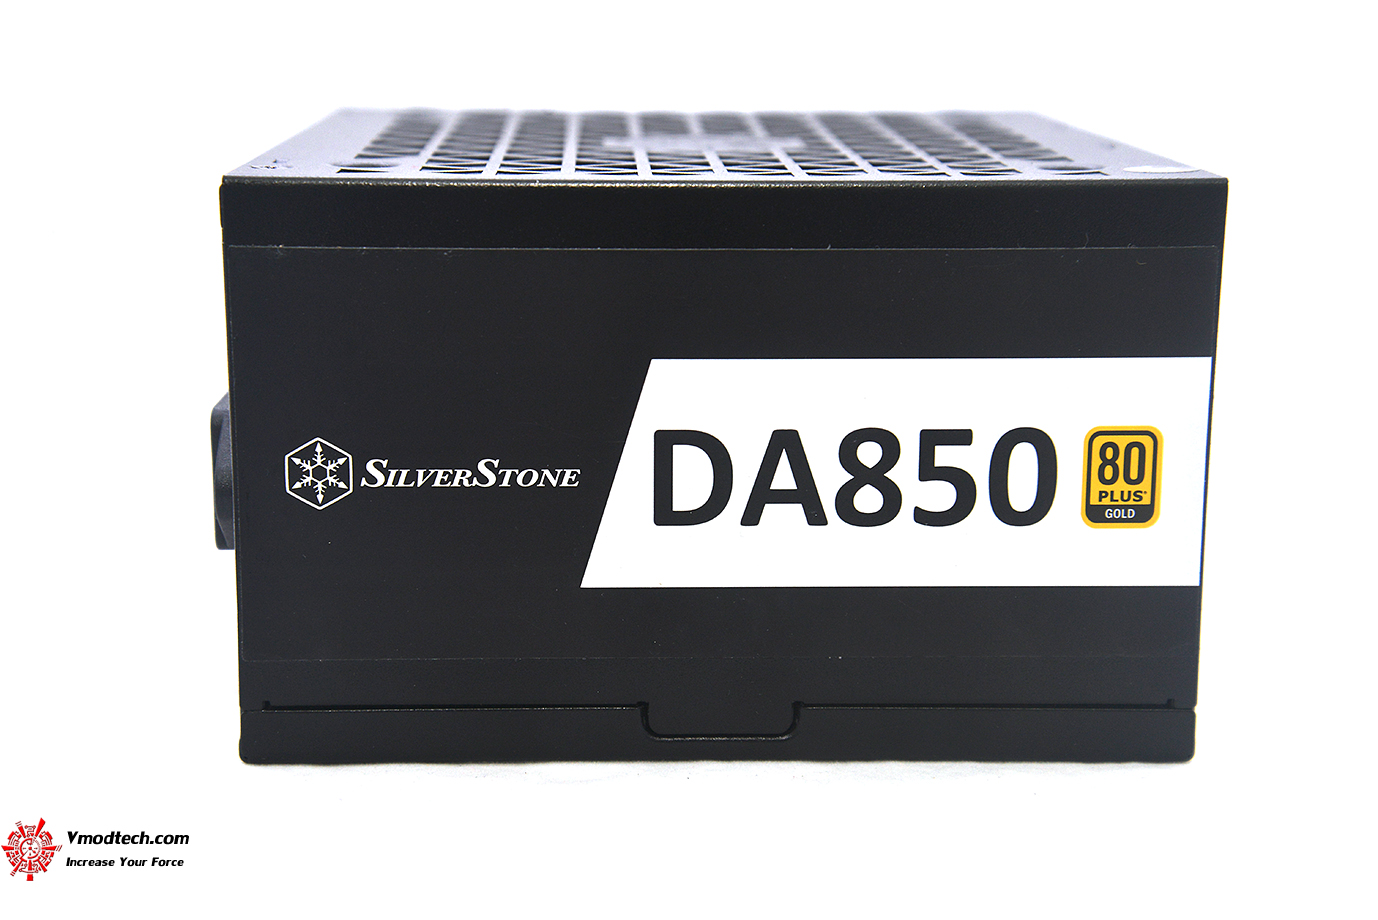 dsc 6608 SilverStone DA850 Gold Review